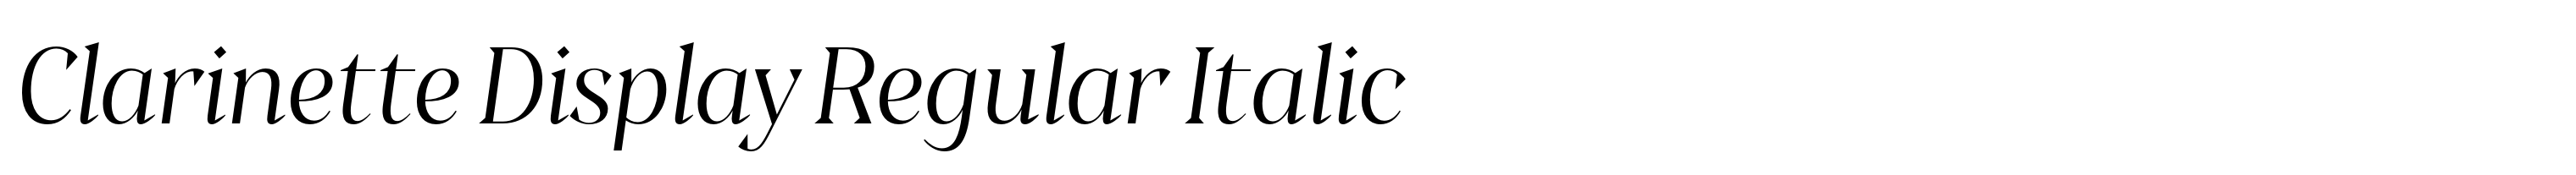 Clarinette Display Regular Italic